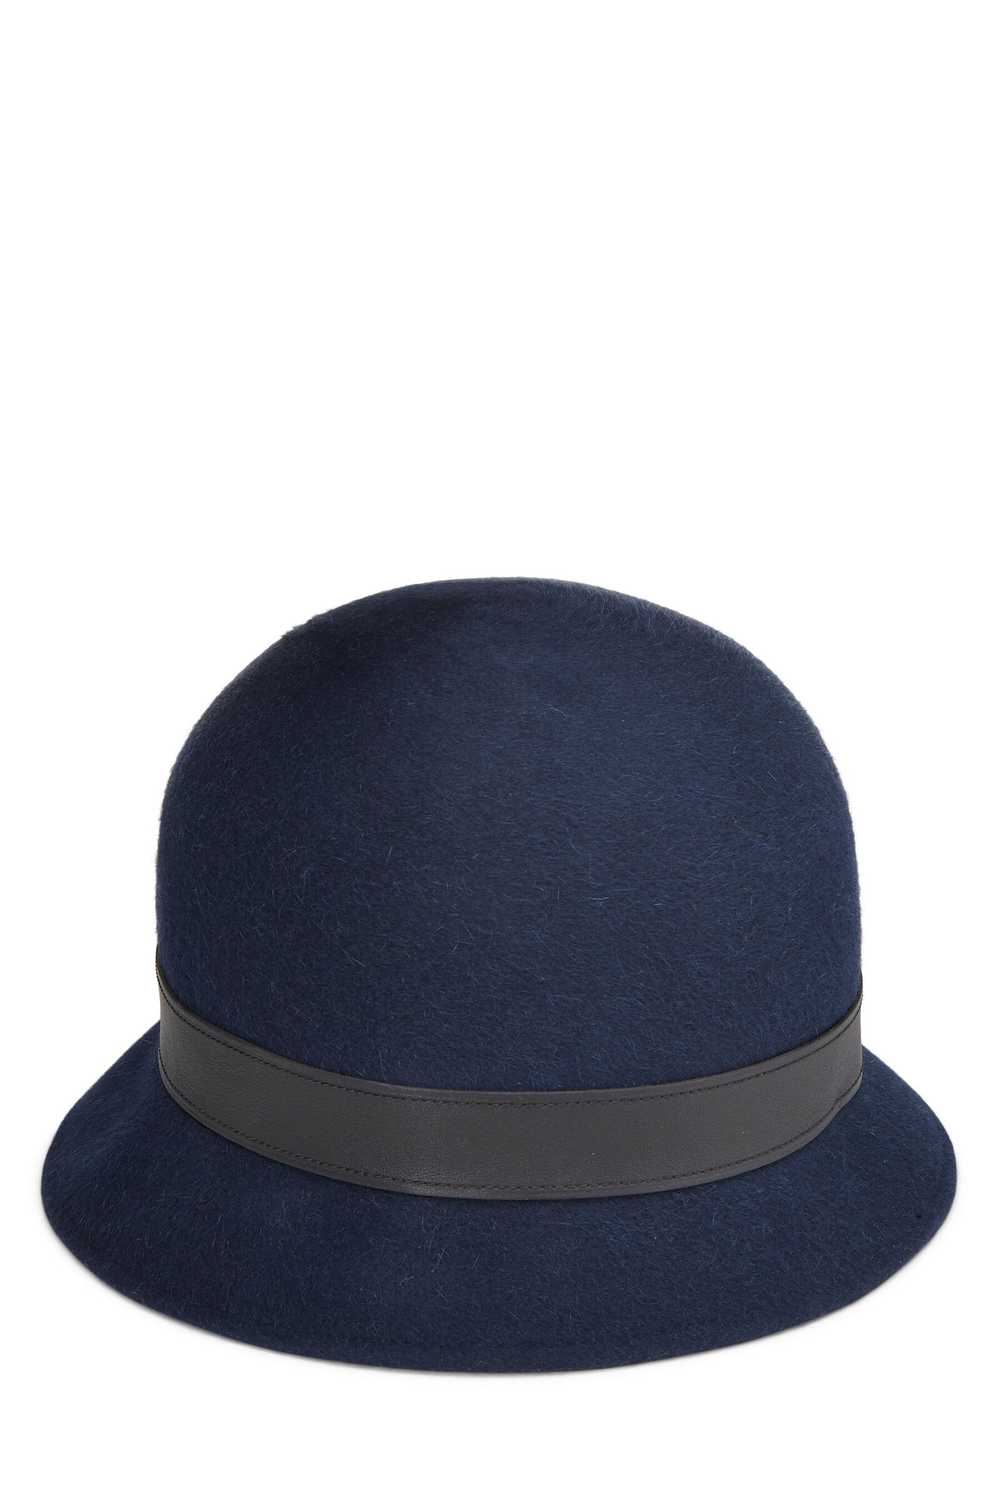 Navy Felt Cloche Hat - image 3